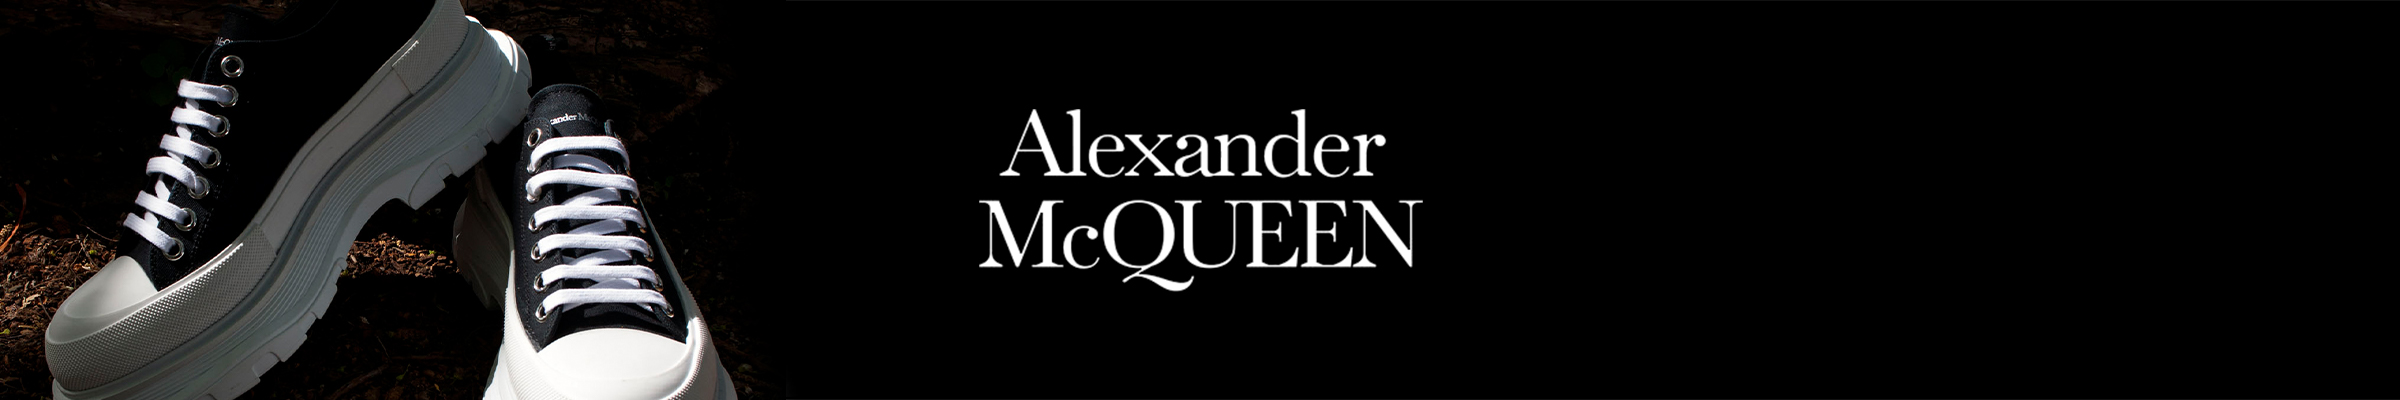 alexander-mcqueen-banner